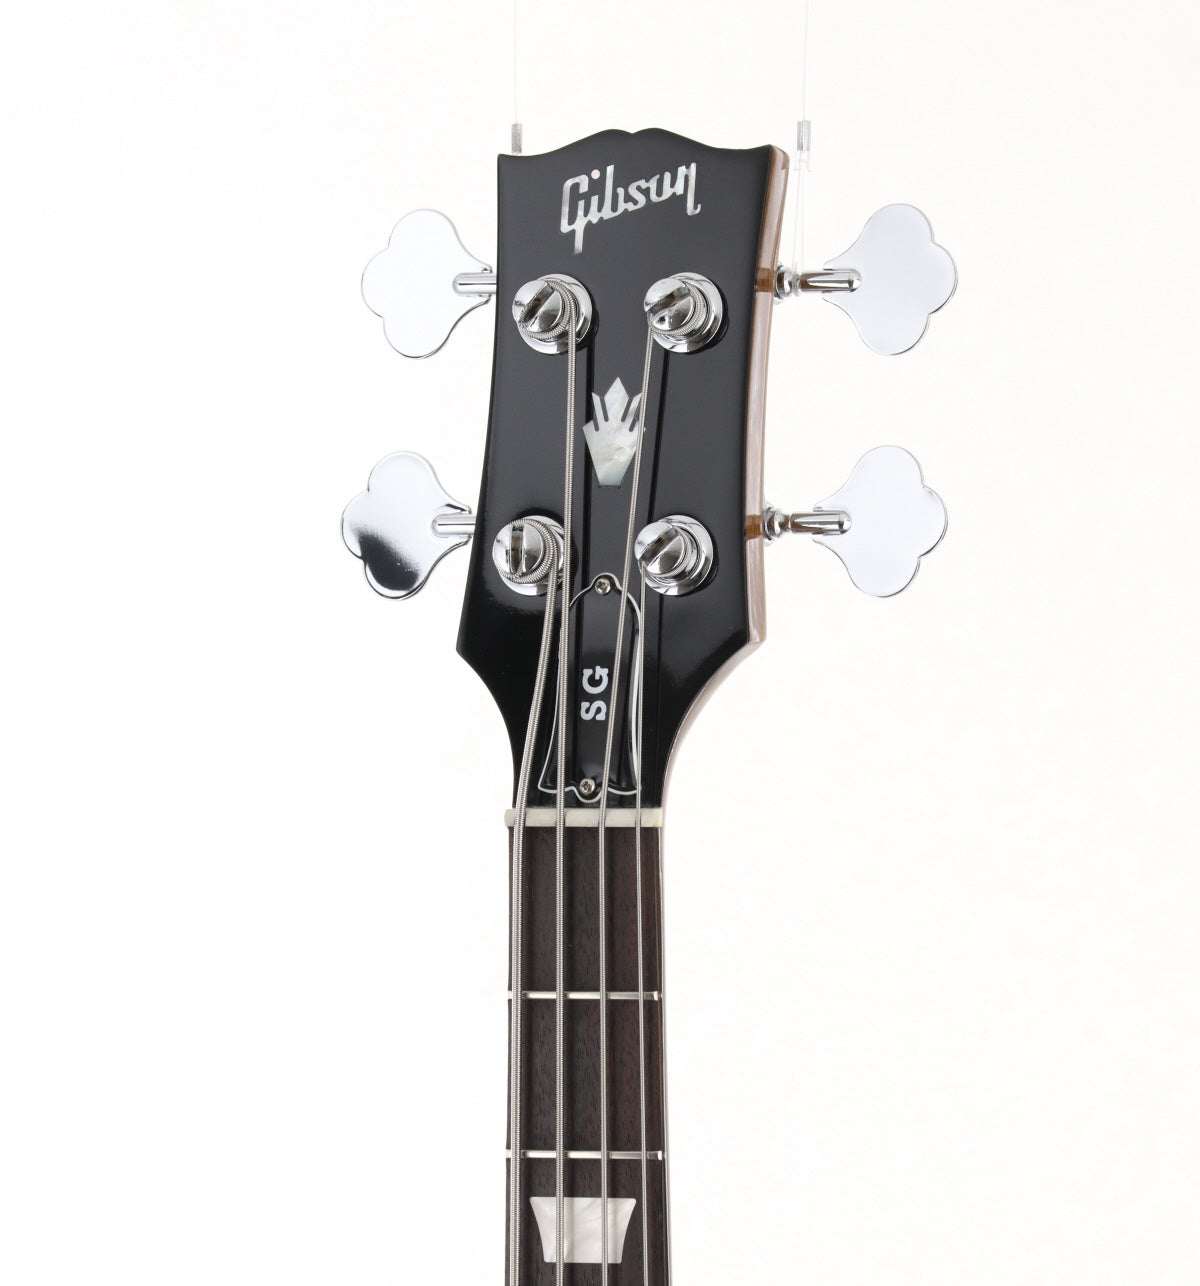 [SN 140089337] USED Gibson / SG Standard Bass 2014 Walnut 2014 [09]